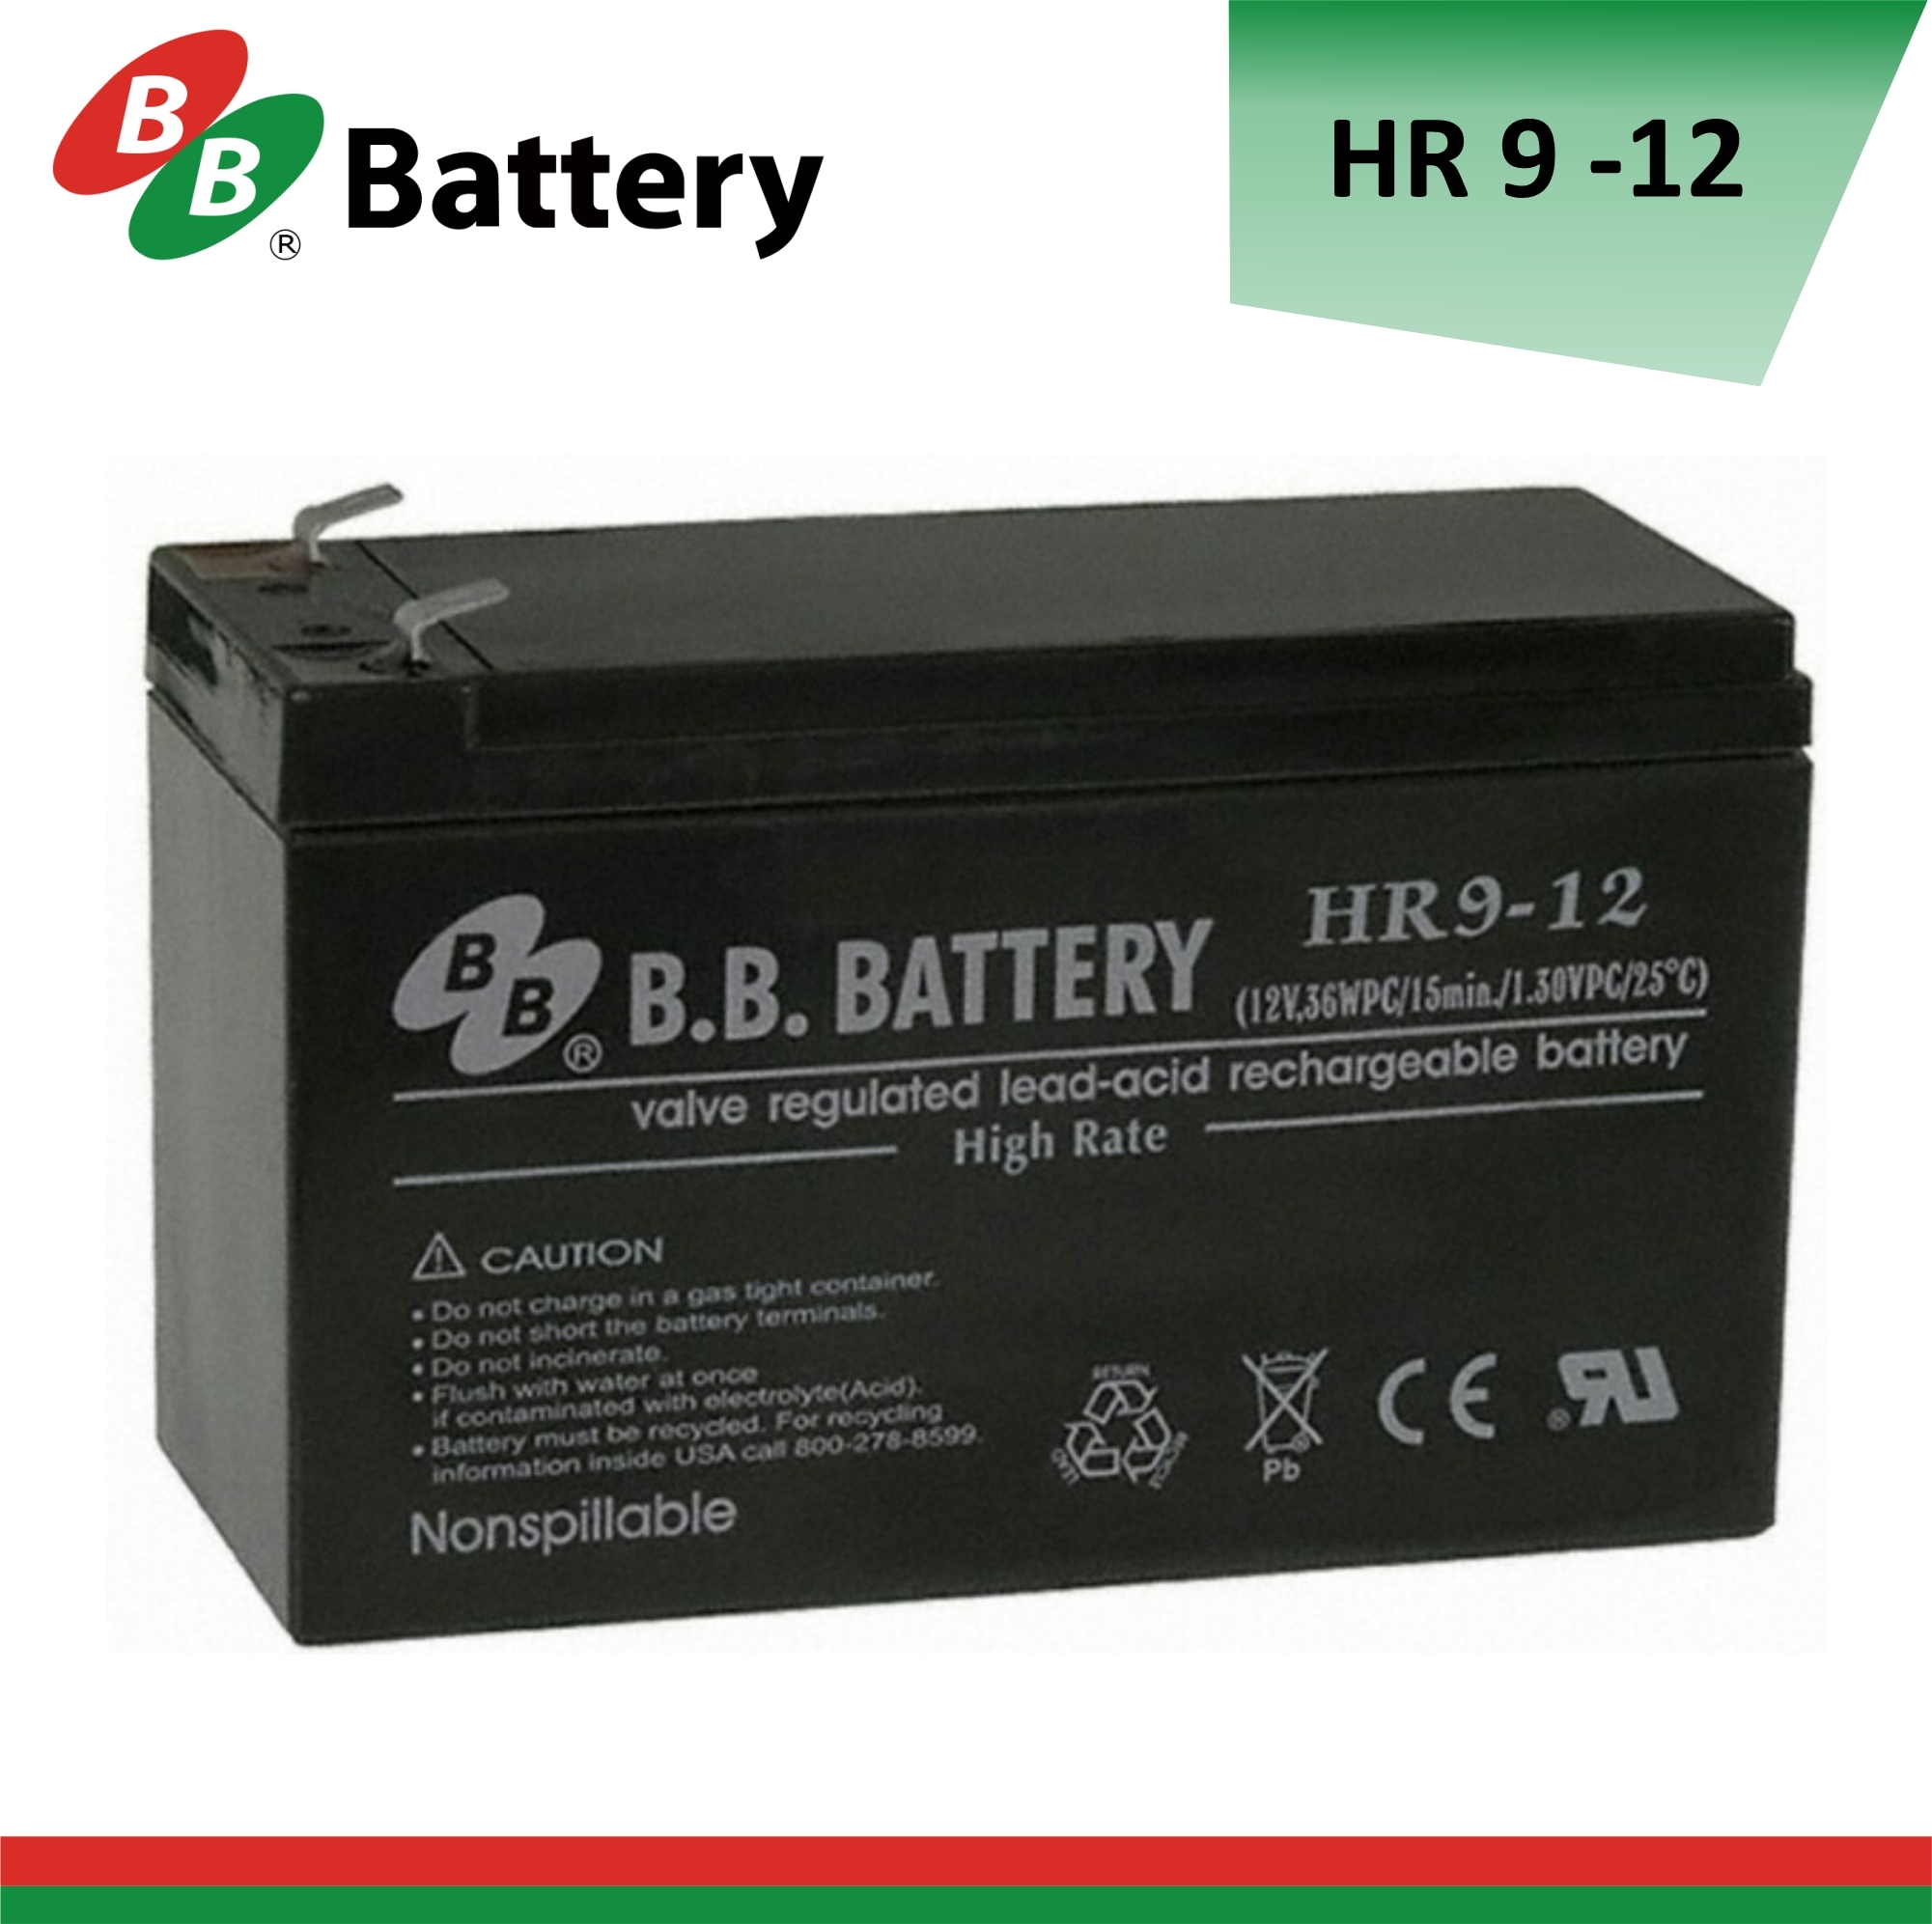 B b battery 12 12. Аккумулятор BB Battary HR 9-12. Батарея BB Battery hr9-12. Батарея аккумуляторная HR 9-12 B.B. Battery. Батарея b.b. Battery hr9-6.